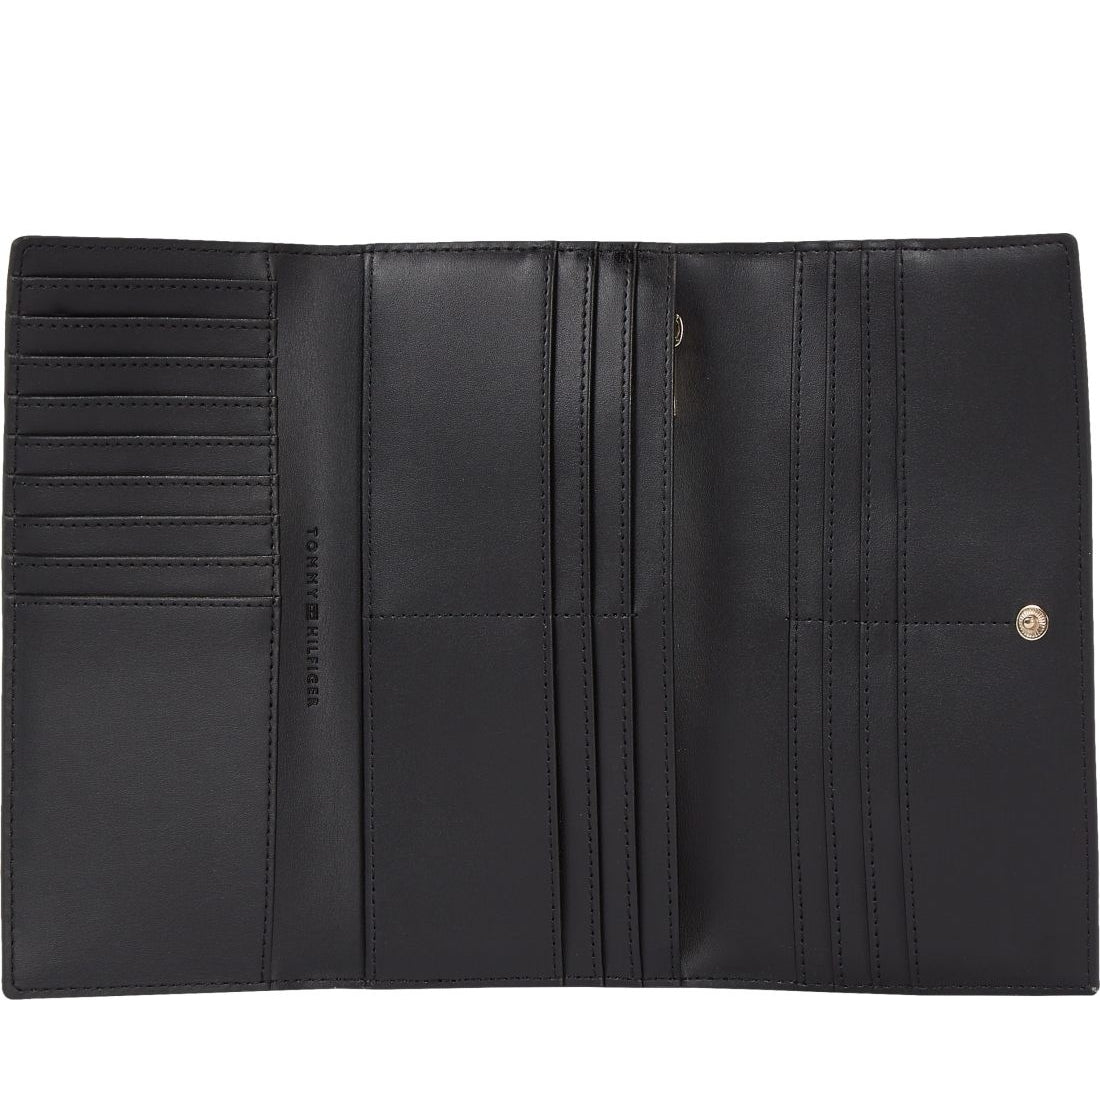 Tommy Hilfiger womens black casual large wallet | Vilbury London